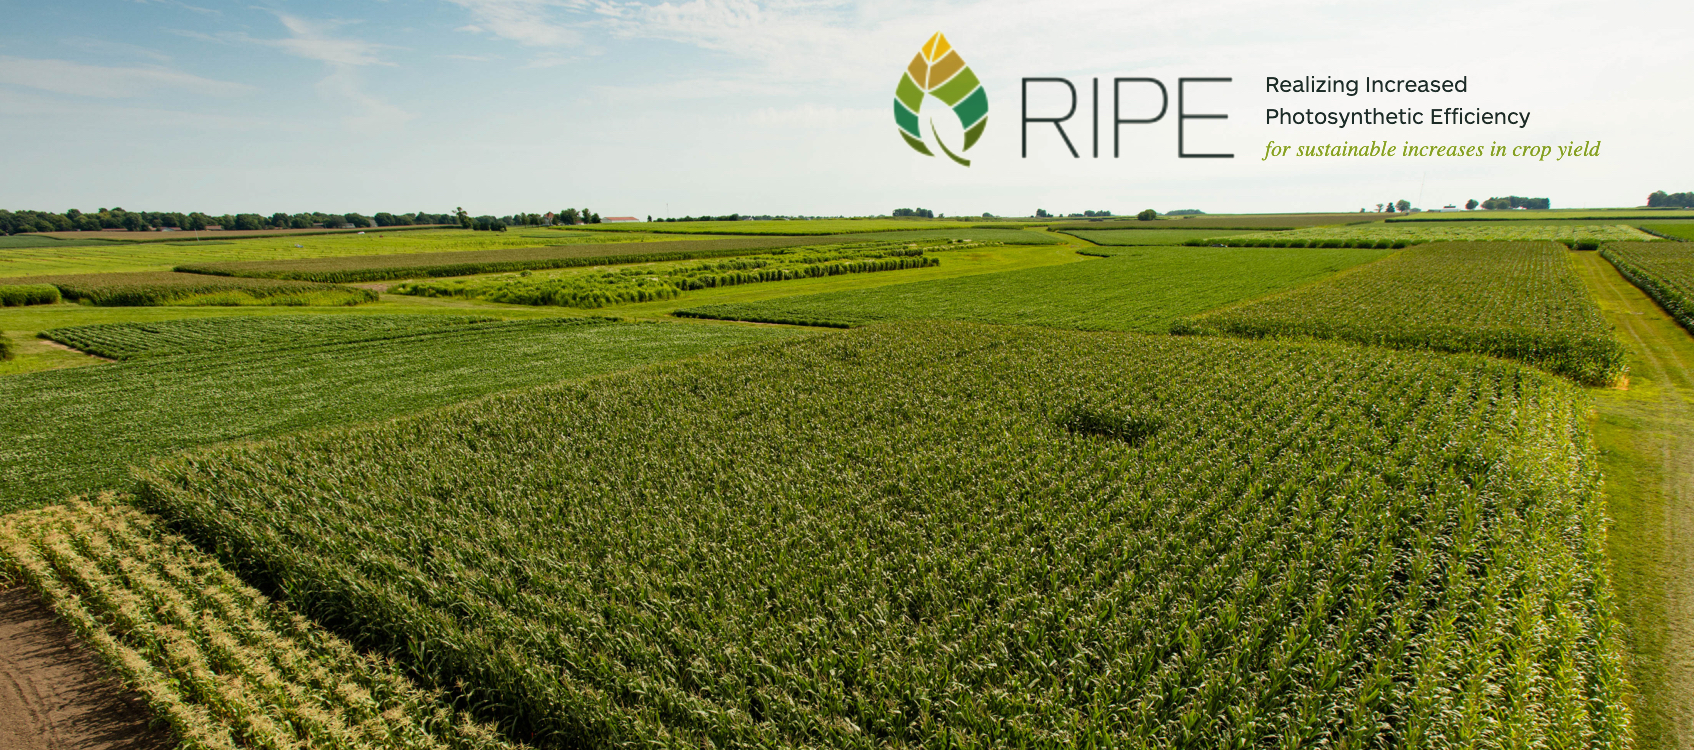 © 2021 Image courtesy of RIPE. Brian Stauffer, University of Illinois. Maize field trials at the Illinois BioEnergy Farm.